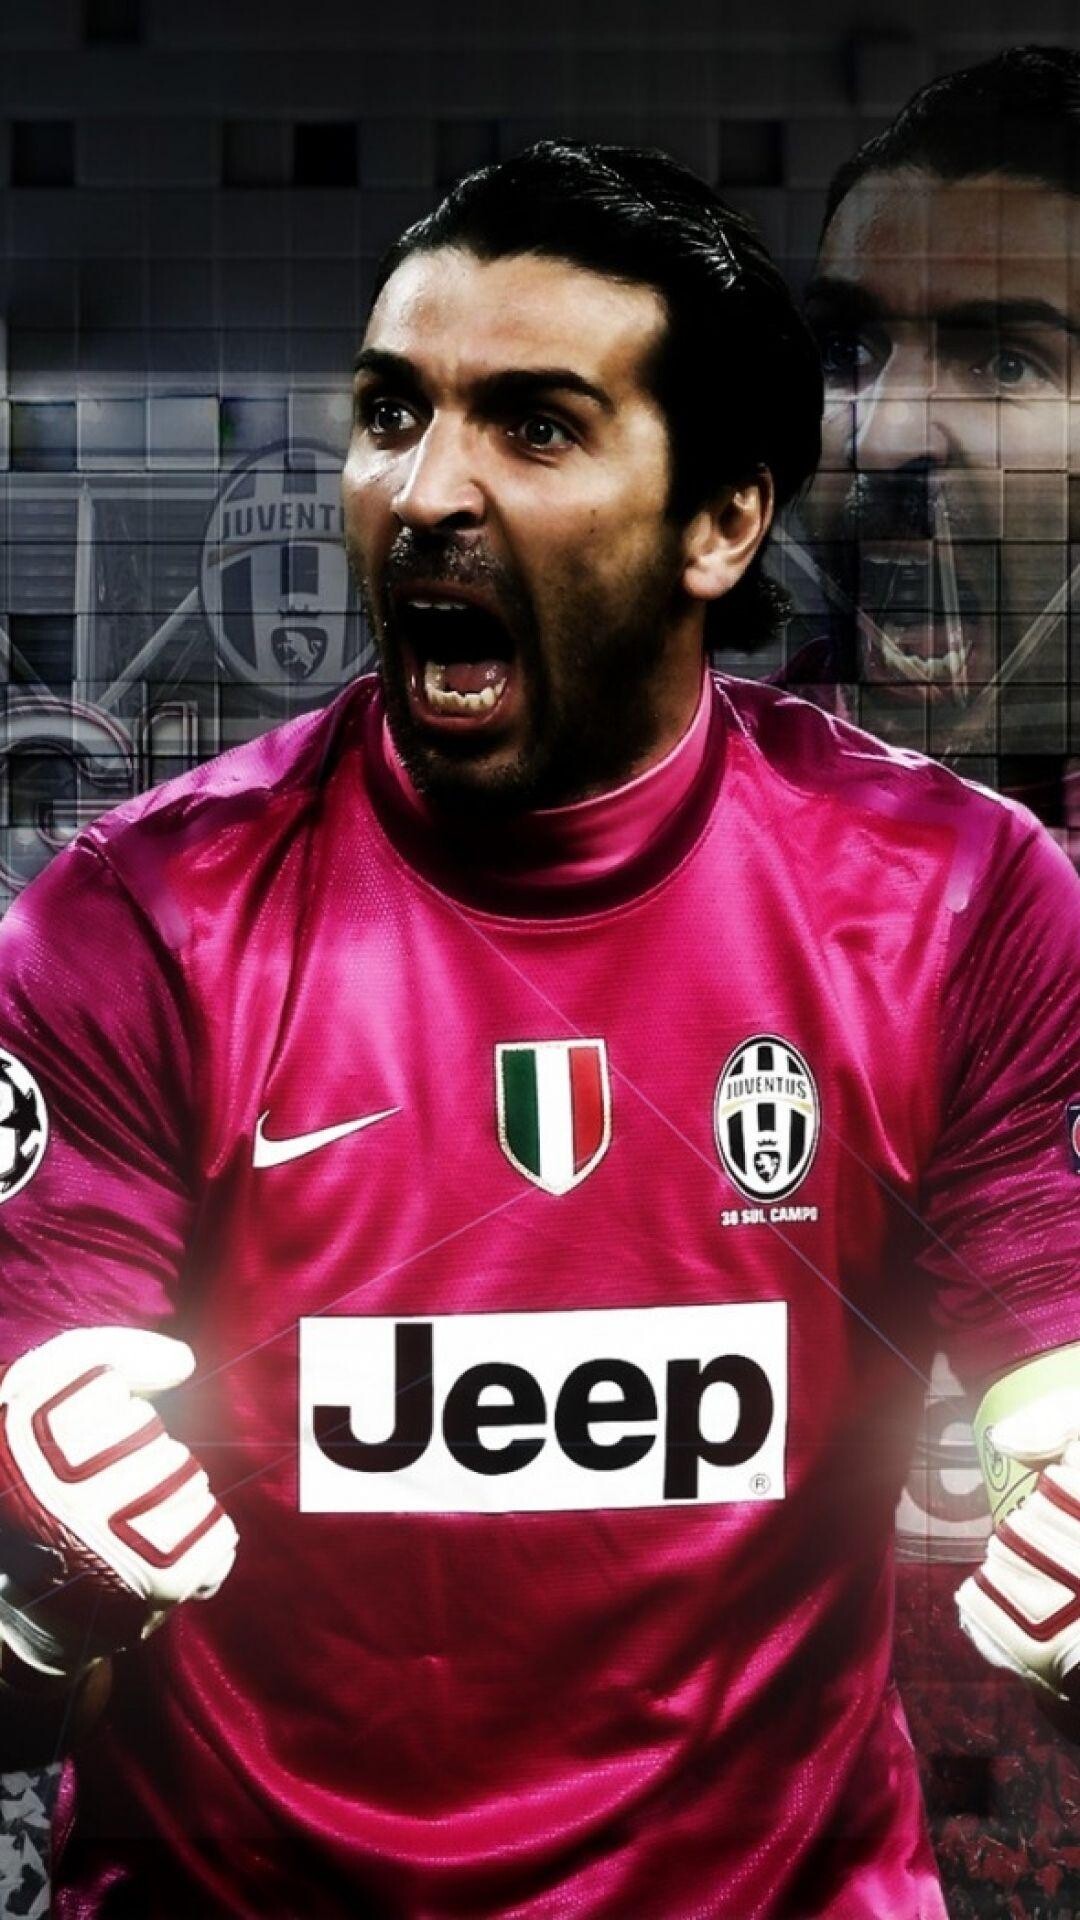 Gianluigi Buffon: An Italian professional footballer who captains and plays as a goalkeeper for the Serie B club Parma. 1080x1920 Full HD Wallpaper.